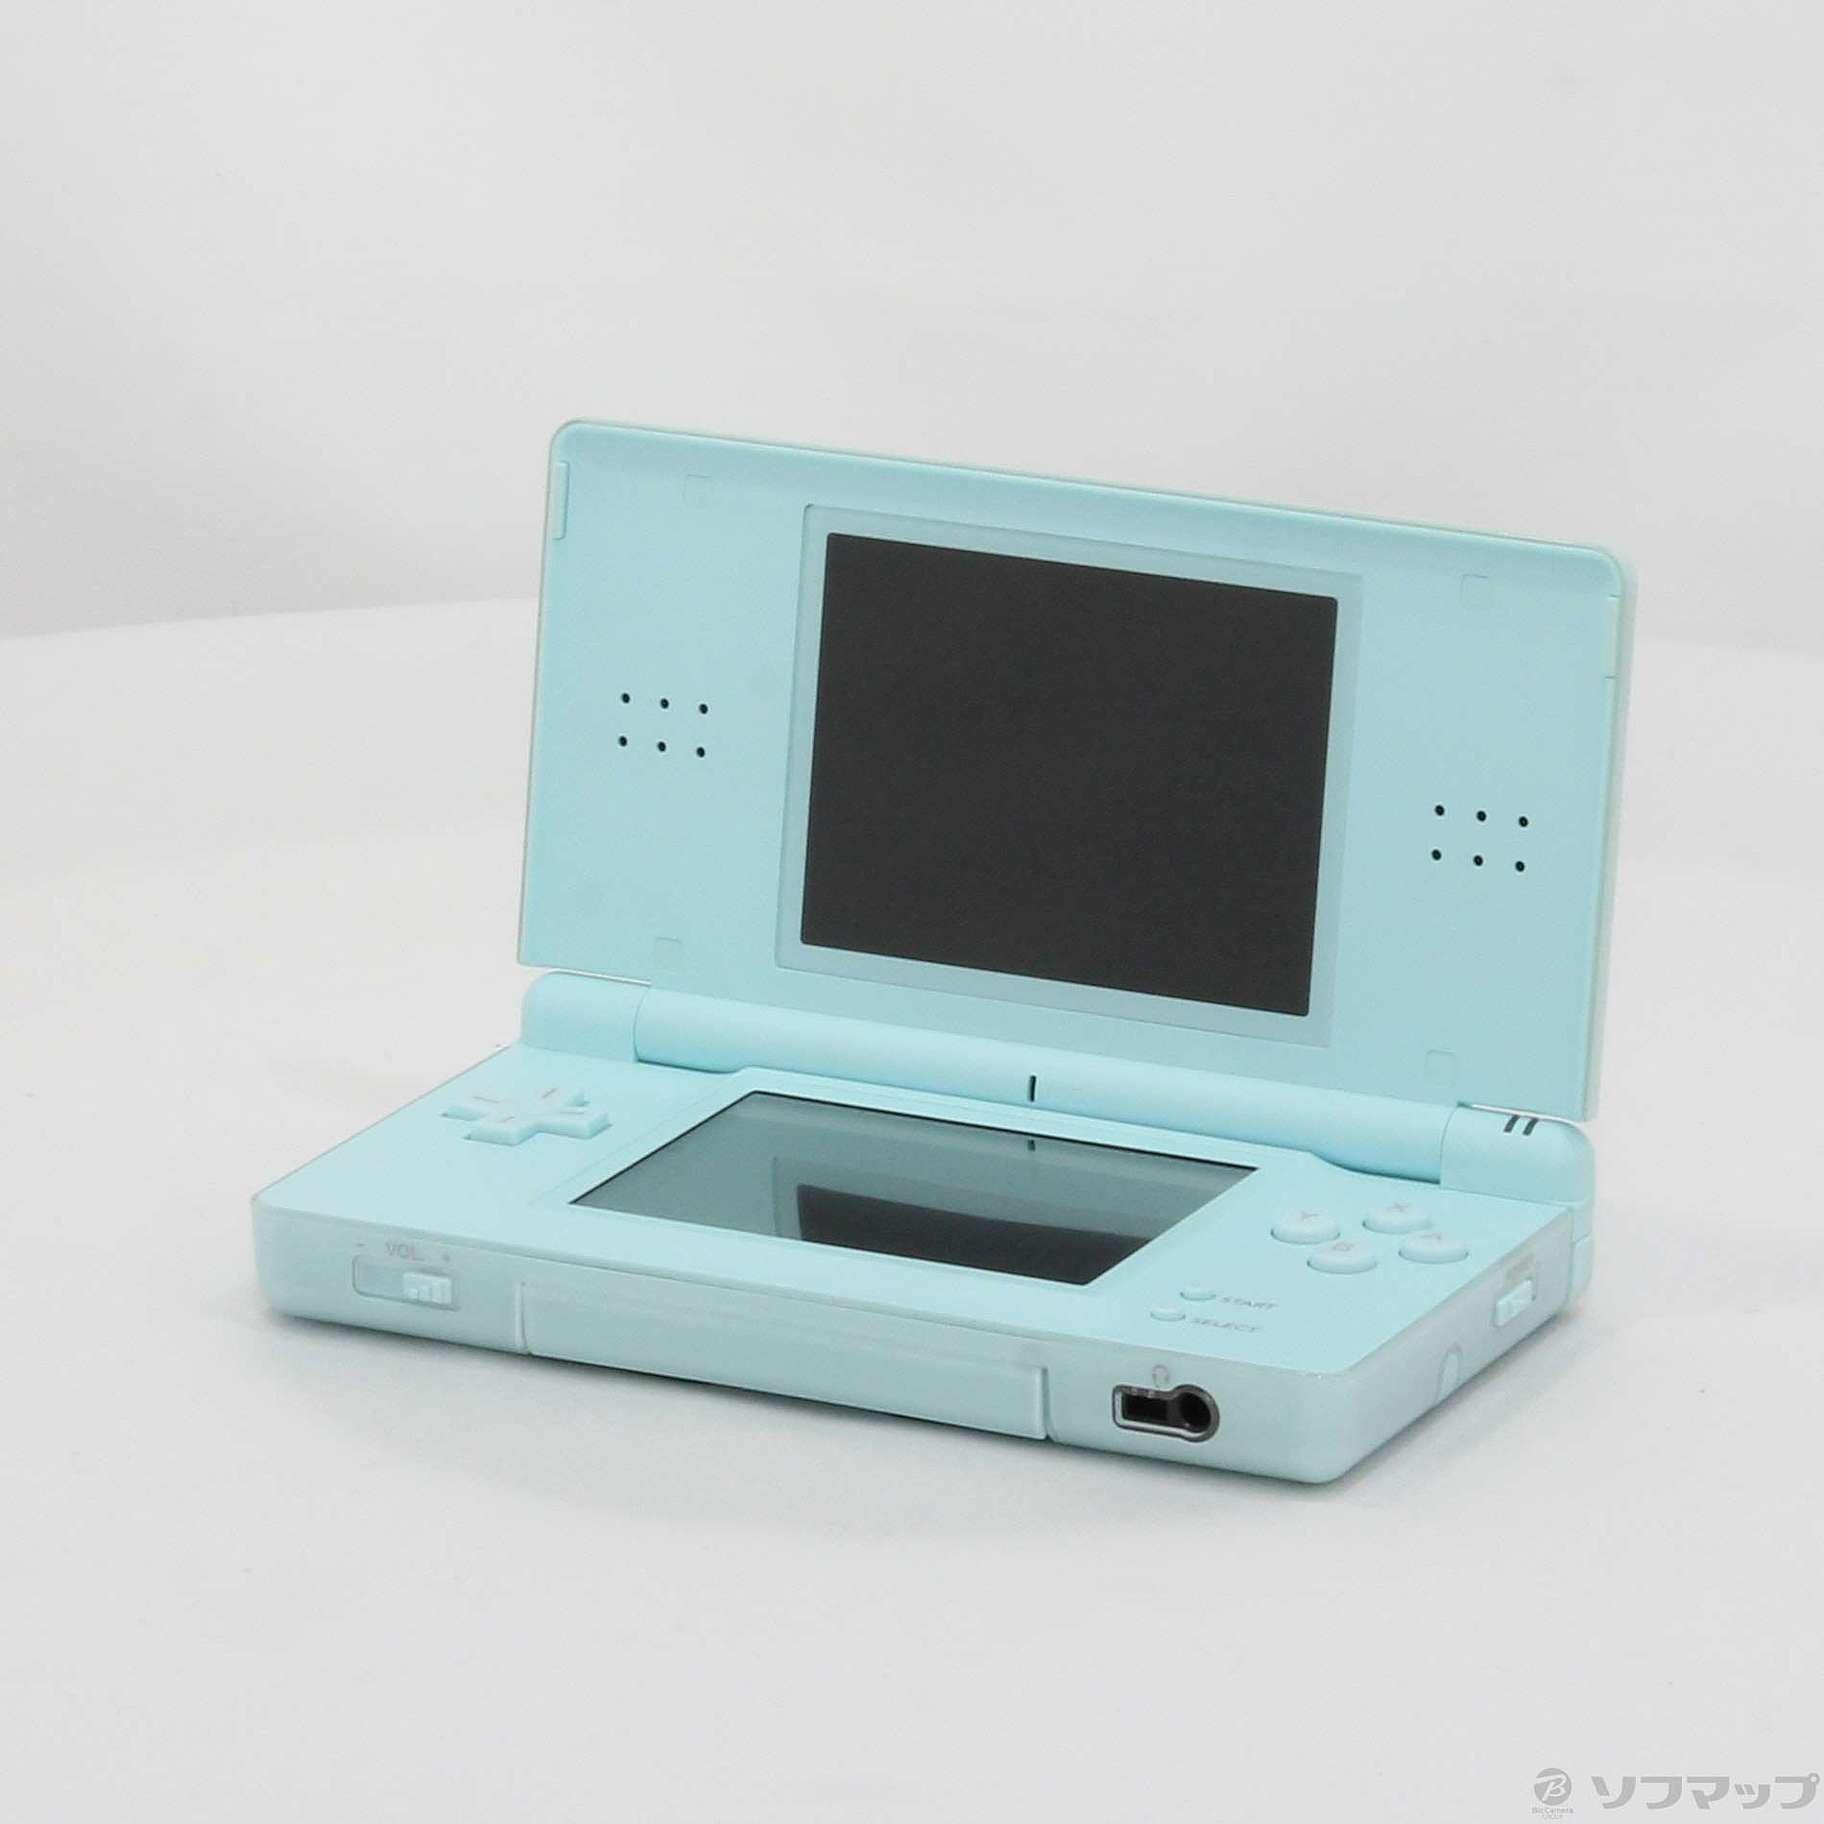 任天堂 Nintendo DS Lite - 文学